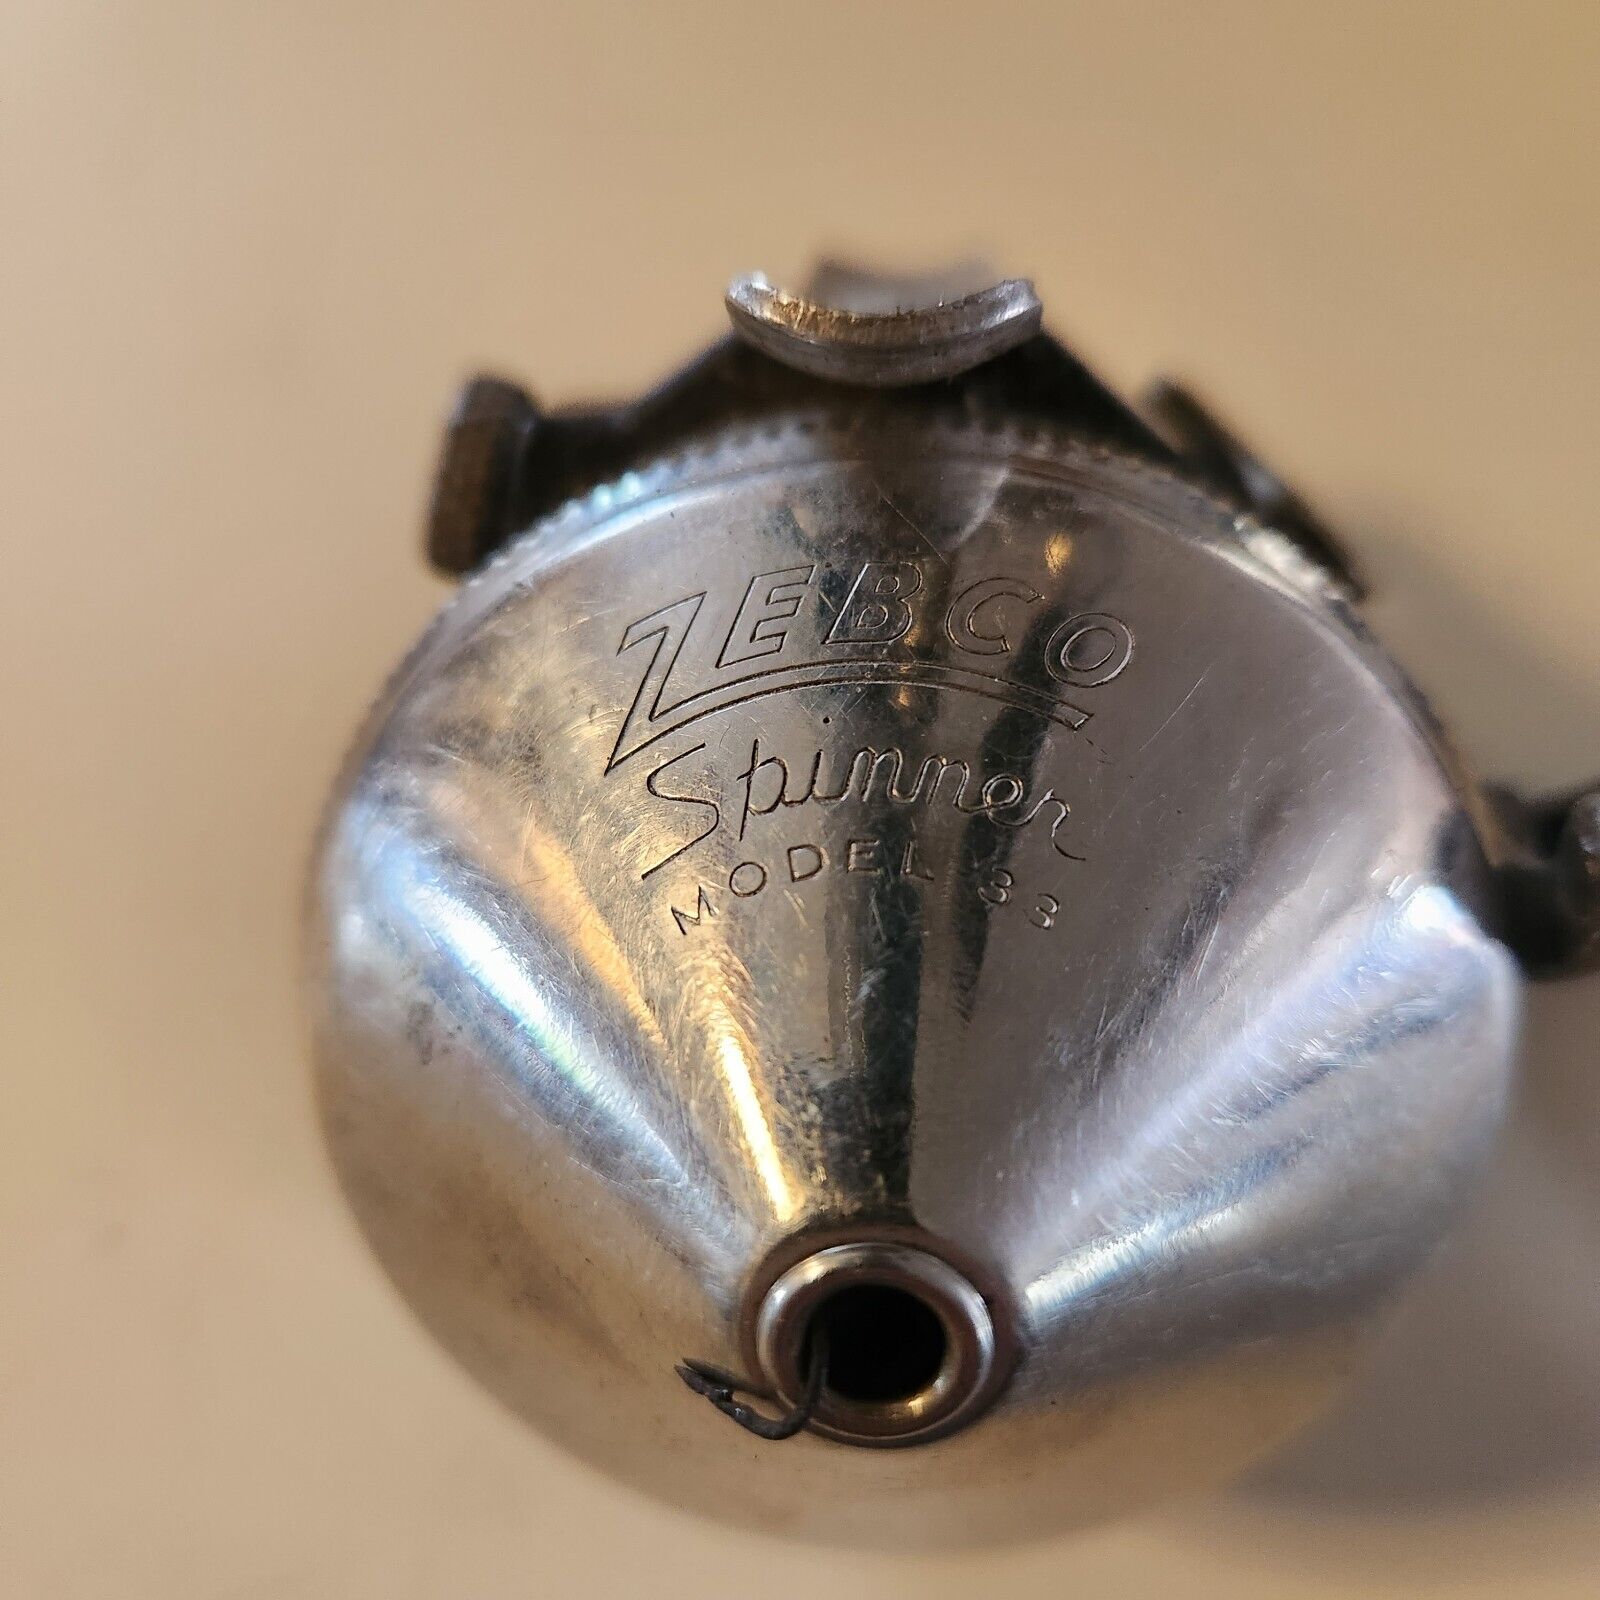 Vtg ZEBCO Spinner Model 33 Fishing Reel Thumb Button Patent Made in Tulsa, Okla.